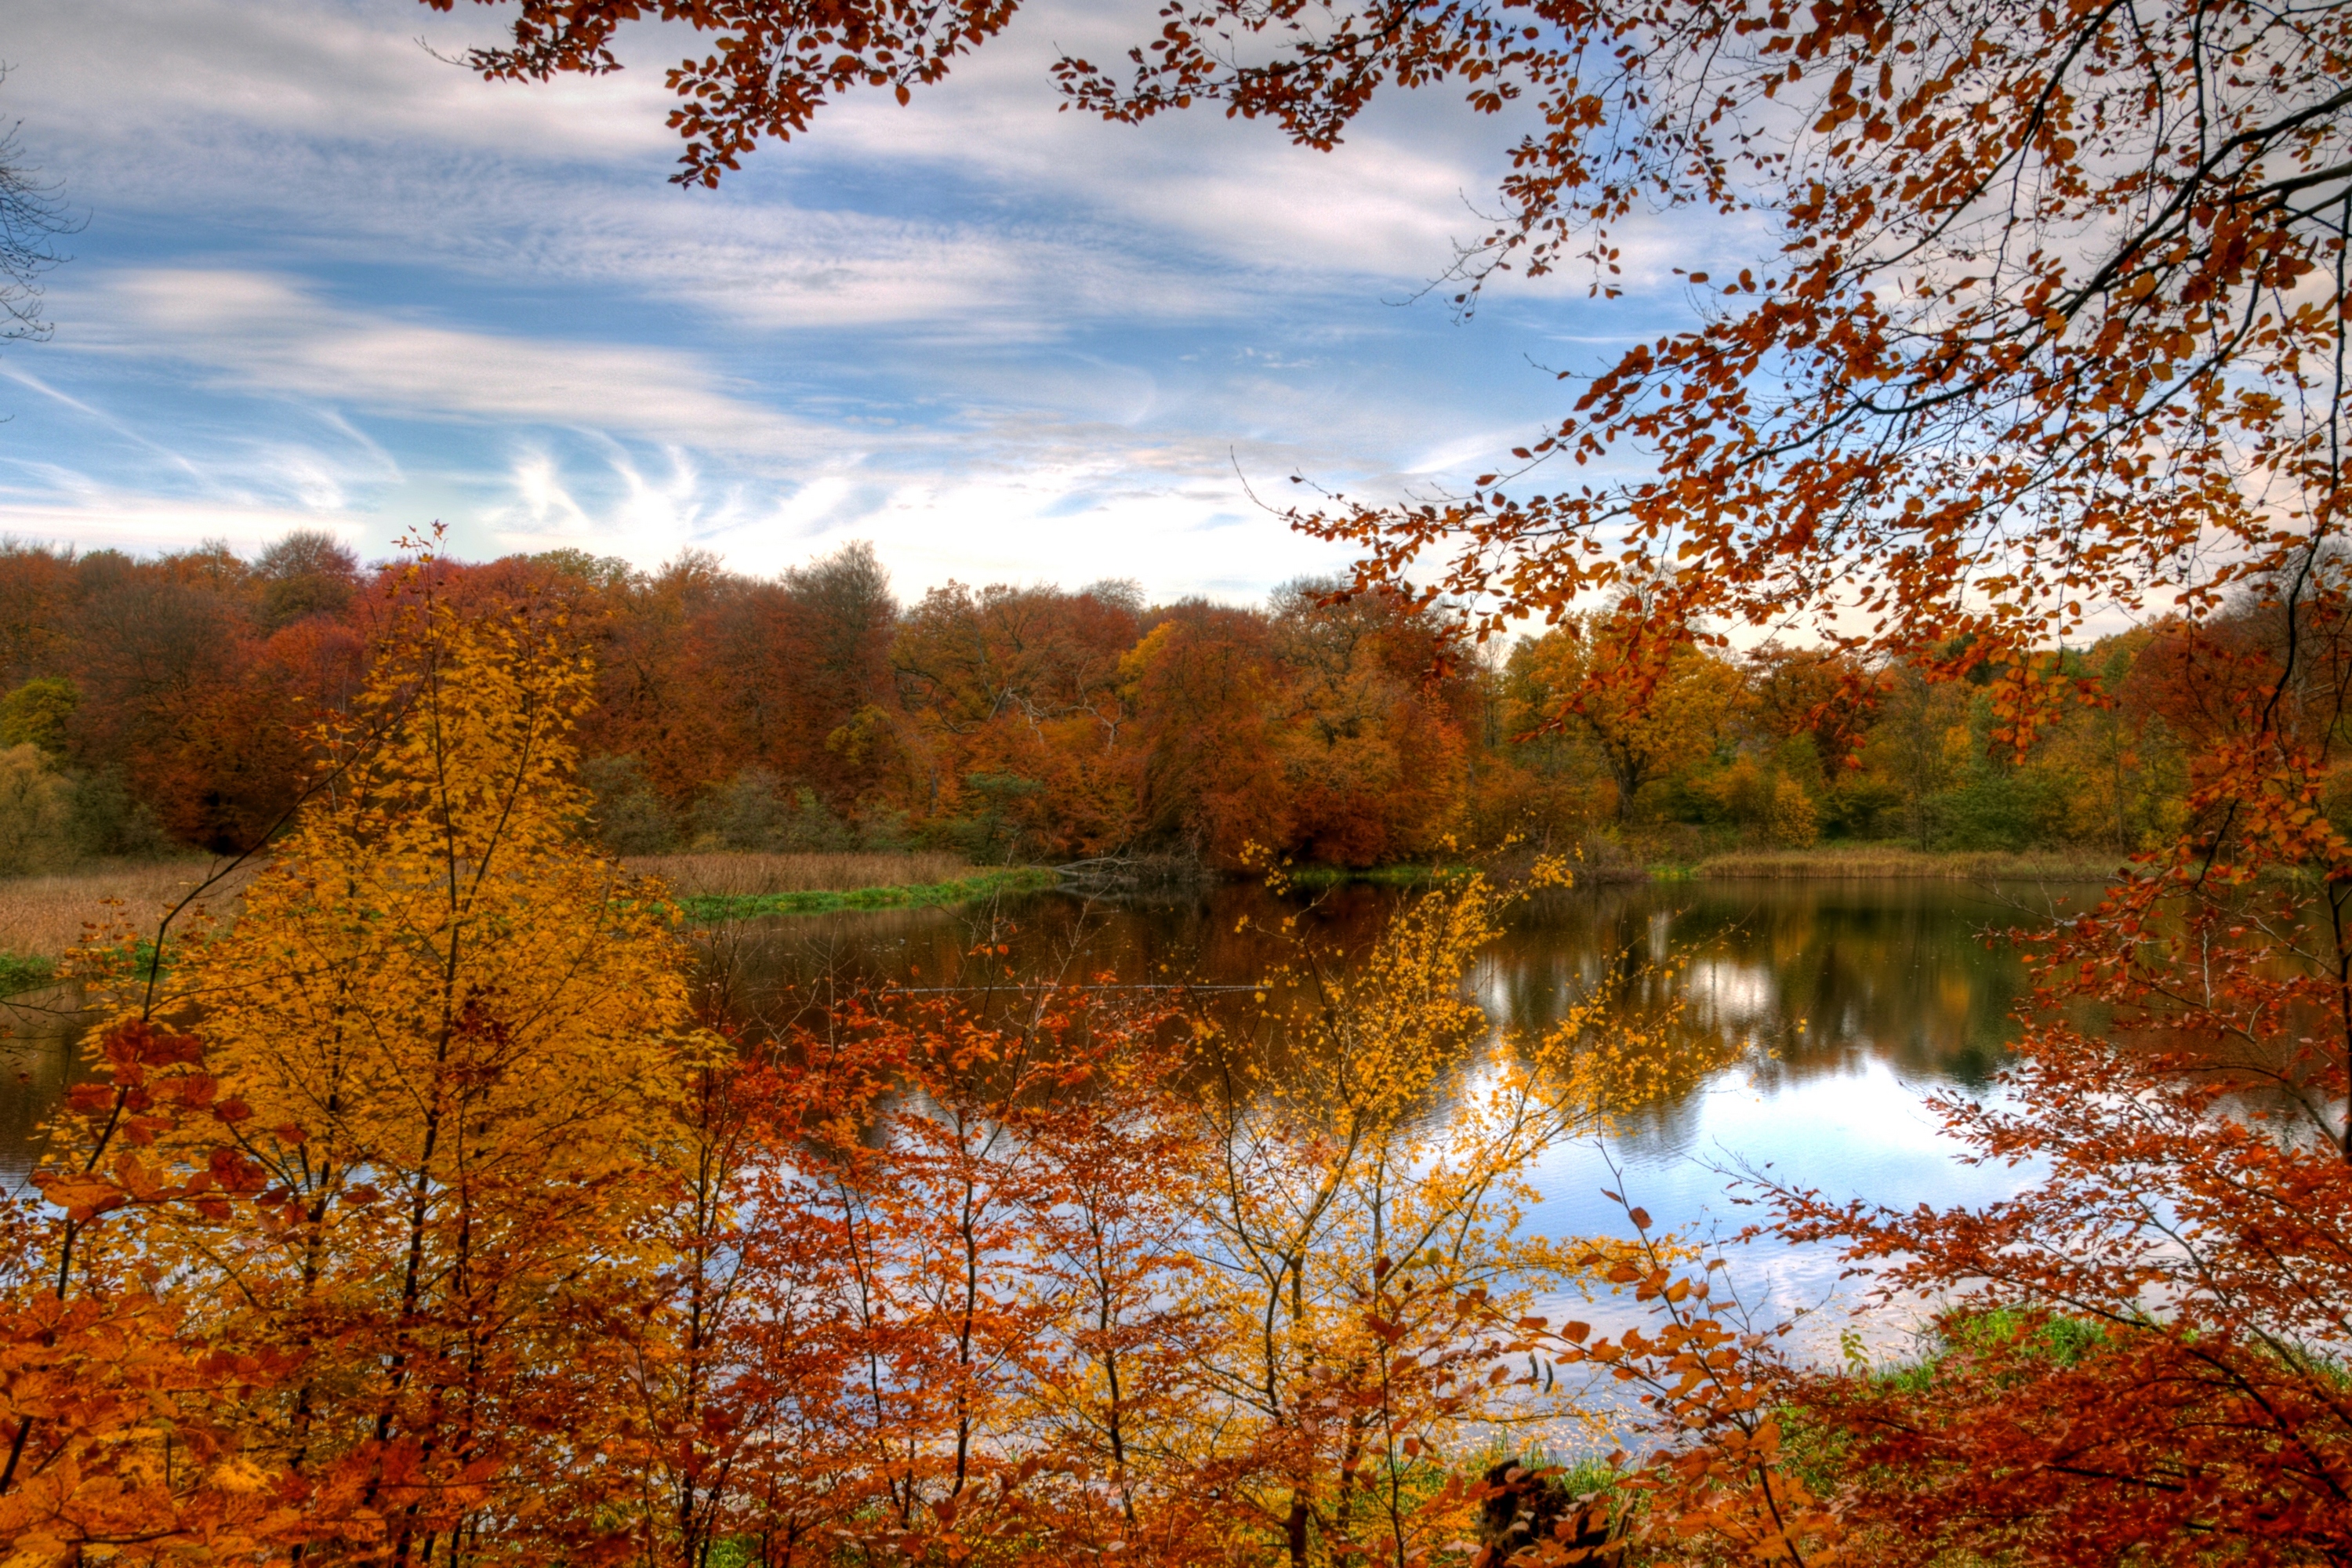 View Fall Foliage By Water | Deborah Beran's Blog